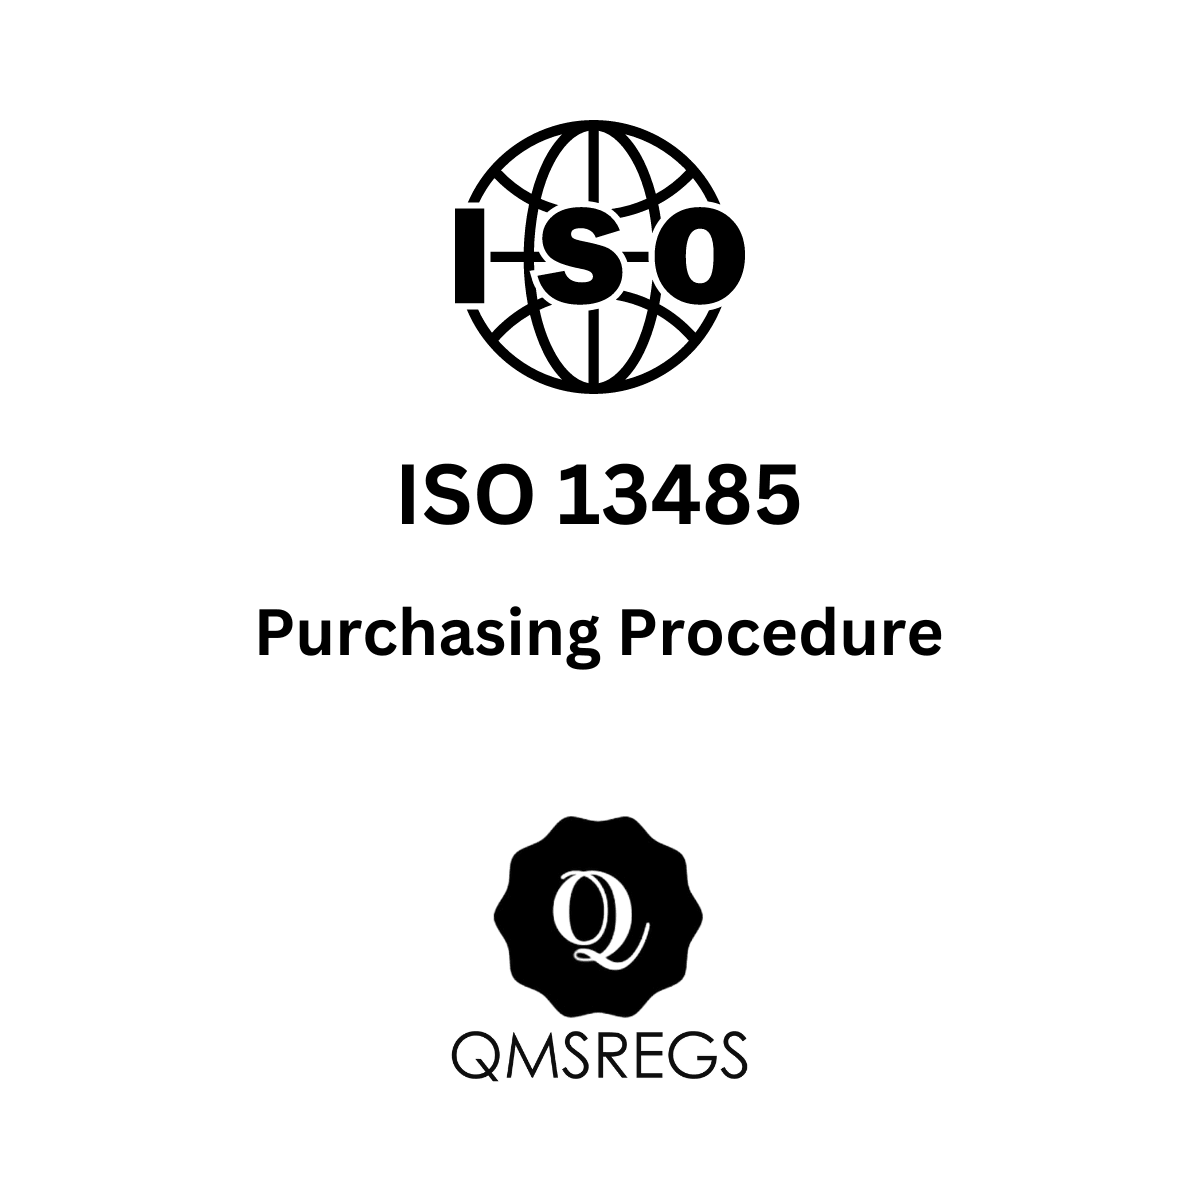 ISO 13485 Purchasing Procedure Template